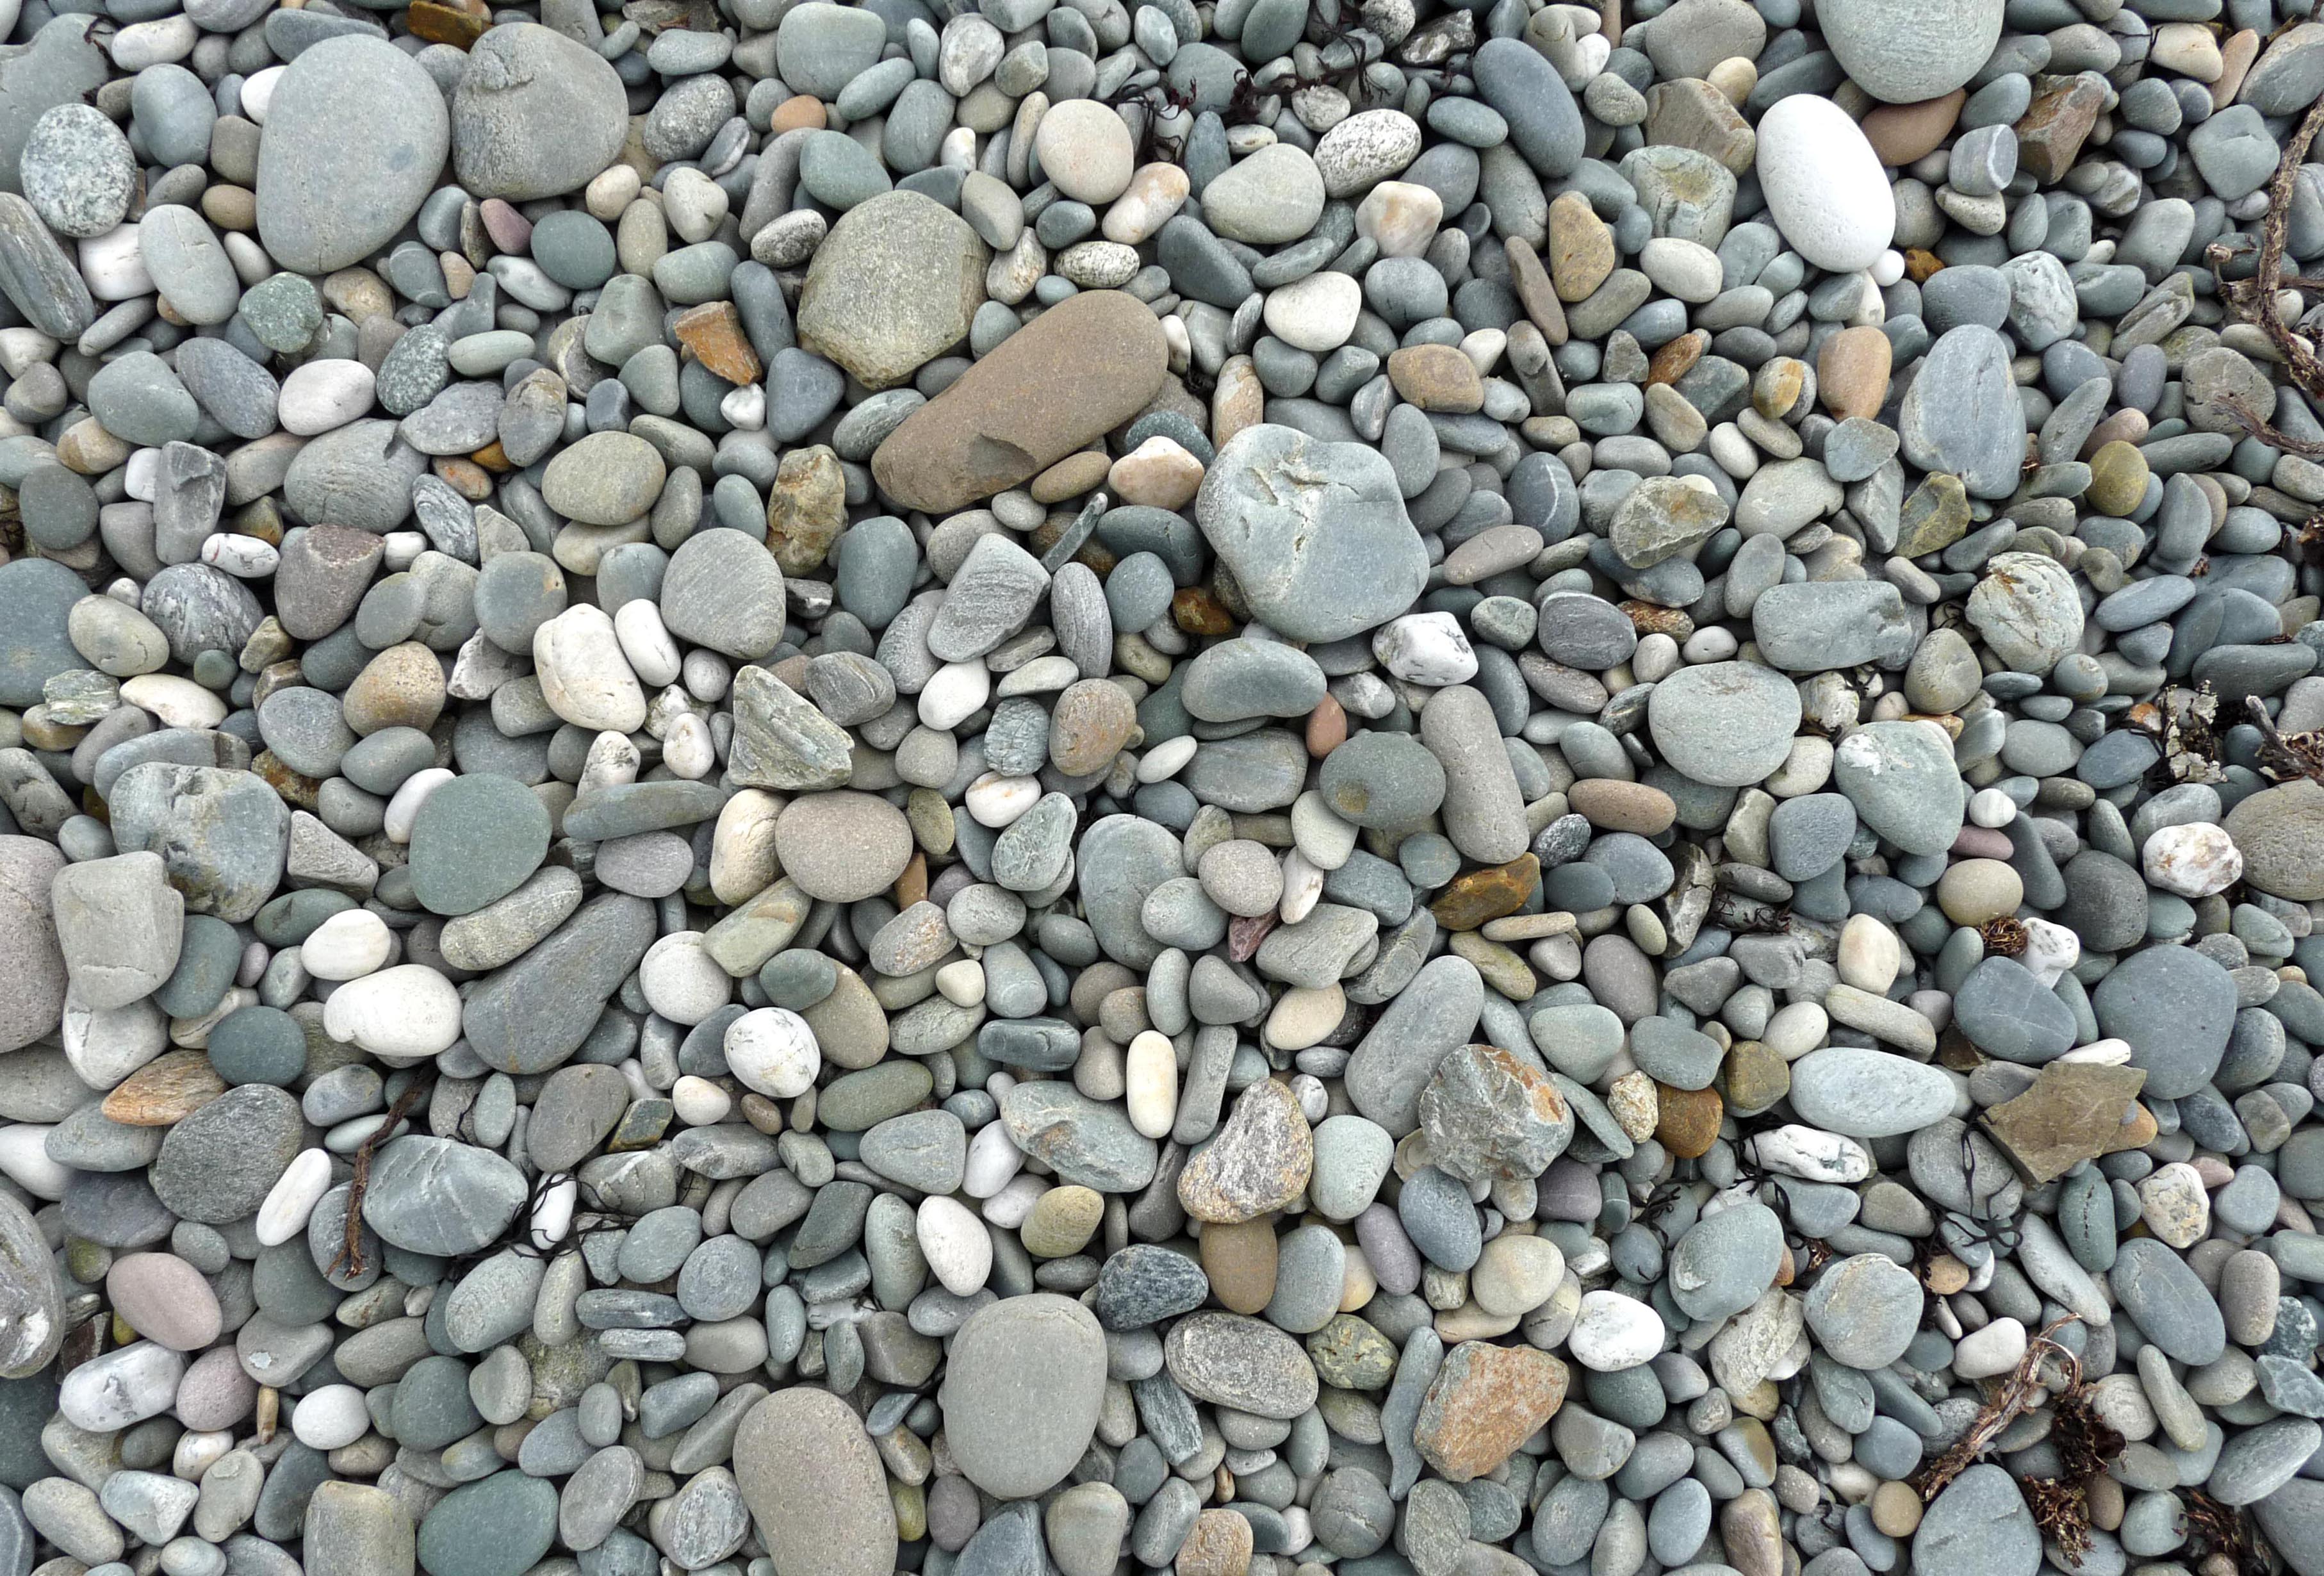 File:Renvyle beach stones (3585122829).jpg - Wikimedia Commons